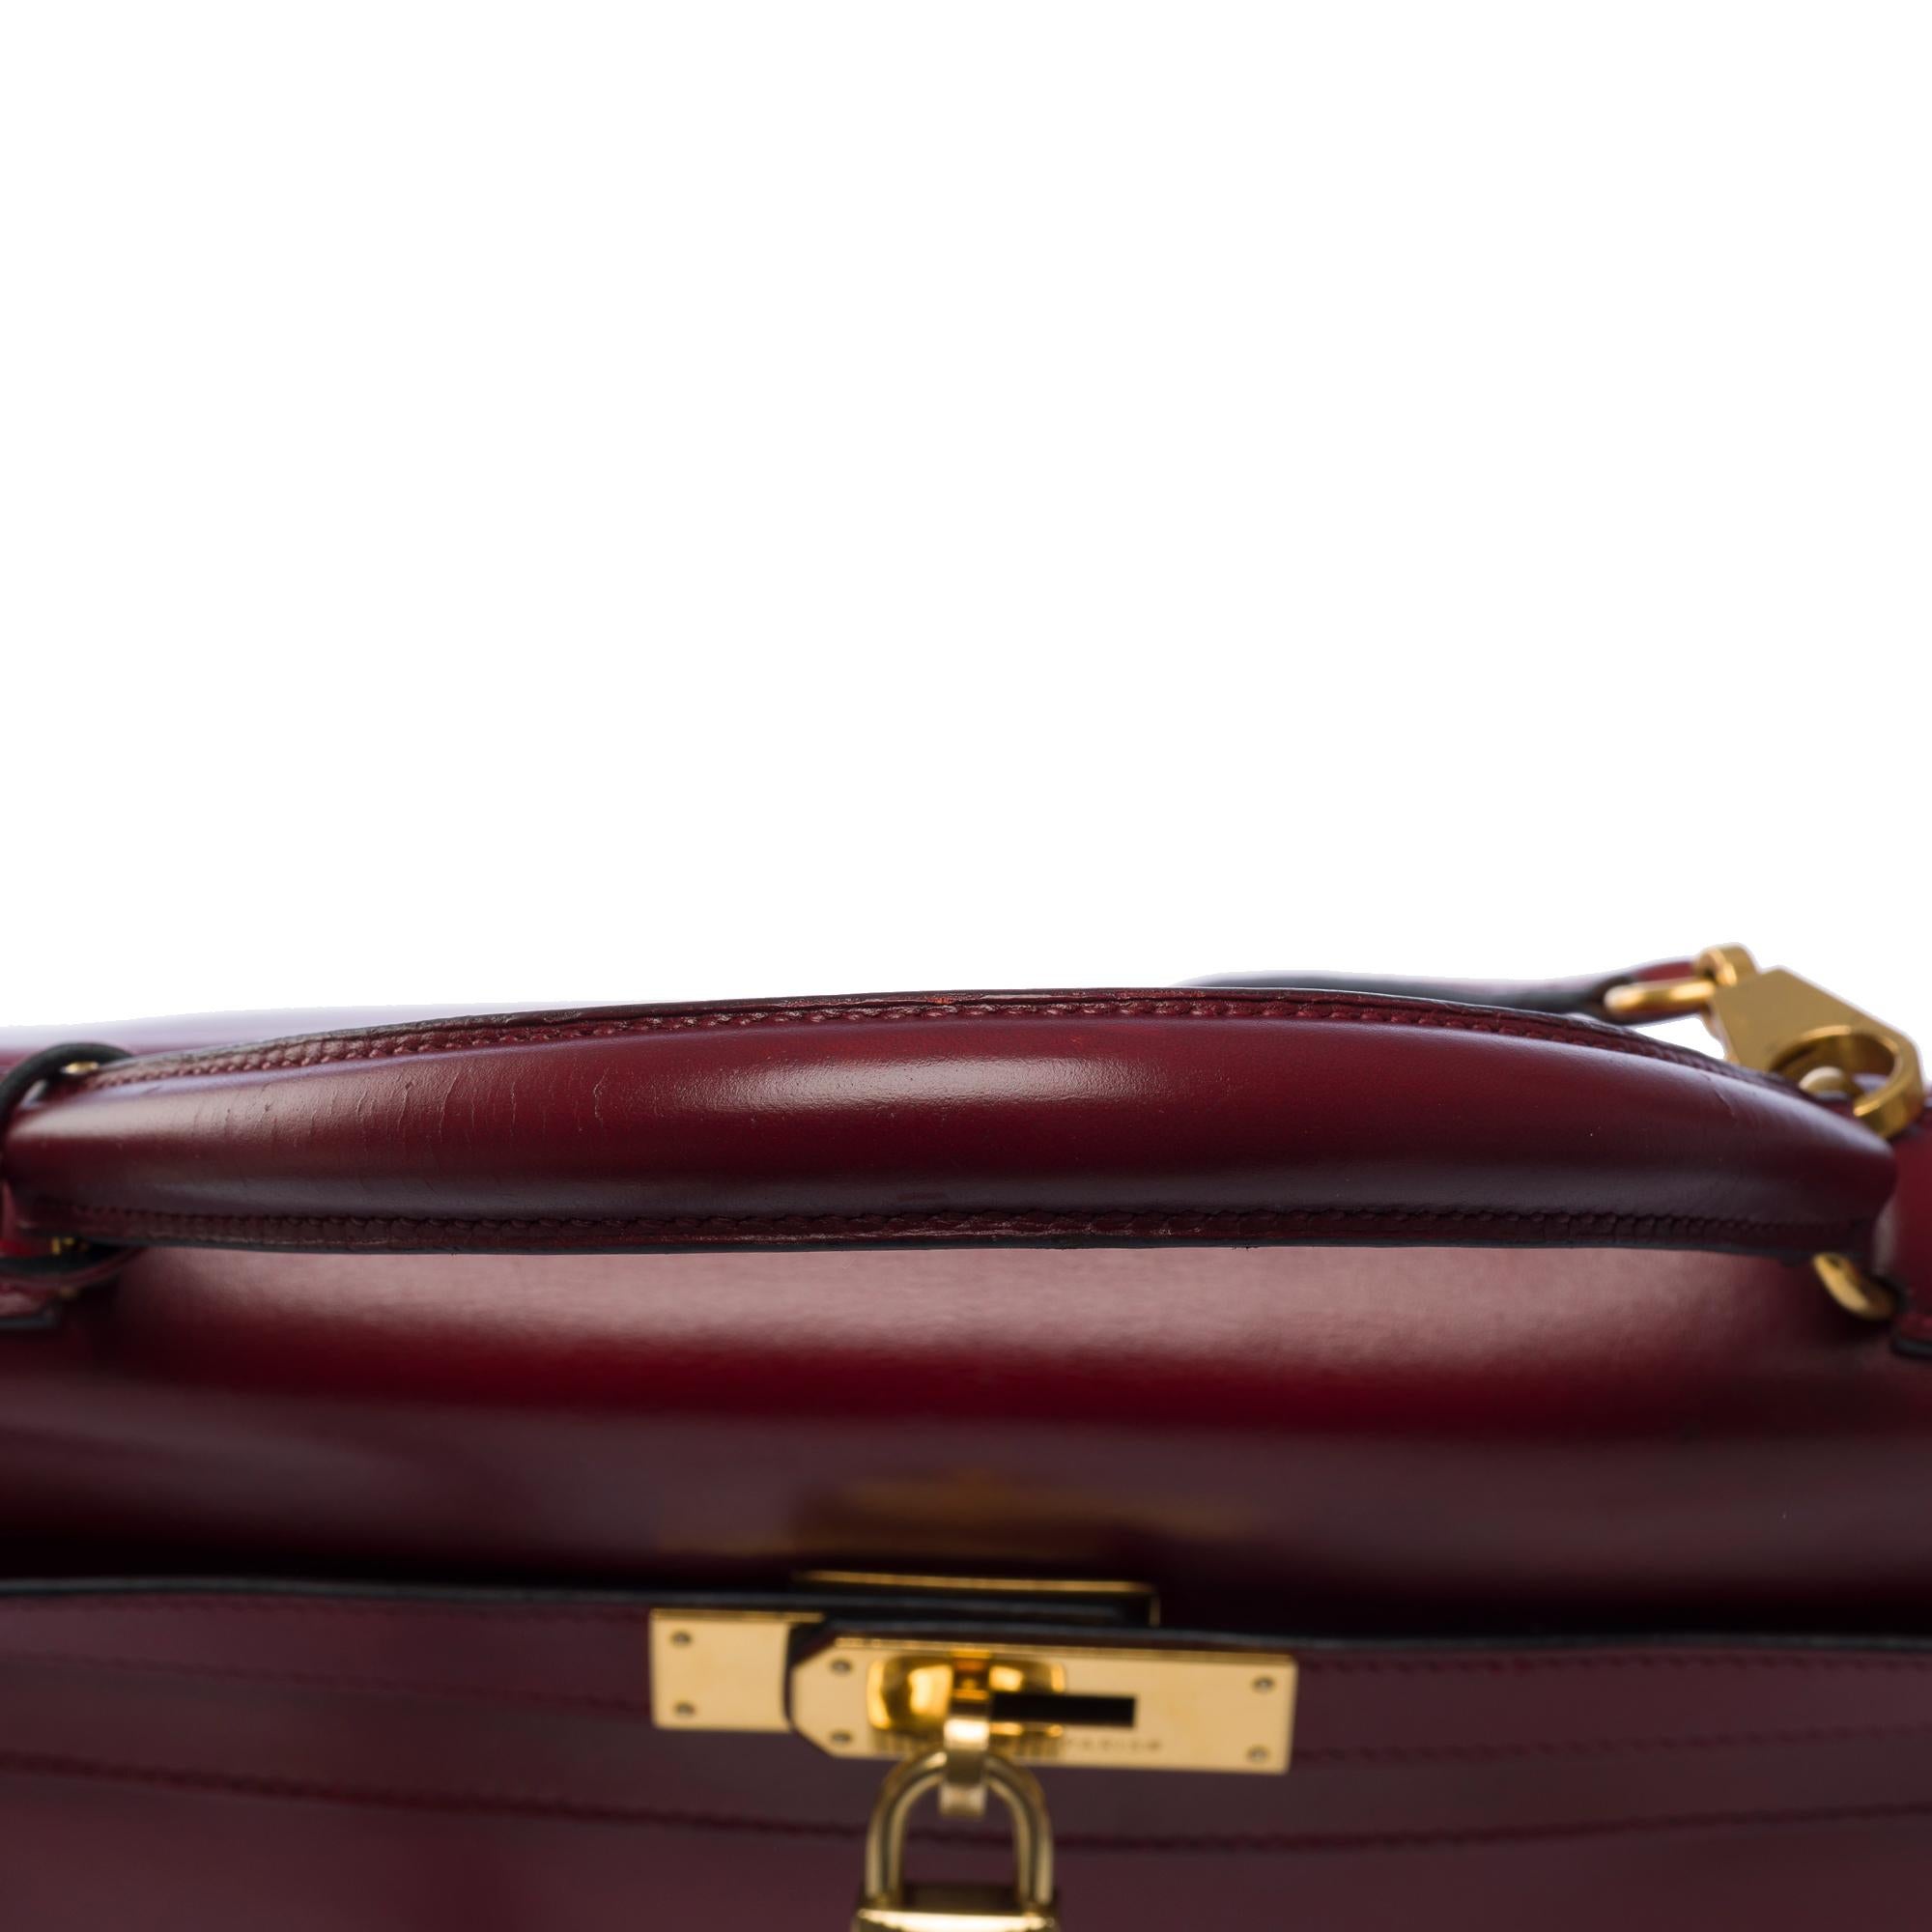 Hermès Kelly 32 retourne handbag strap in Burgundy box calfskin leather, GHW 5